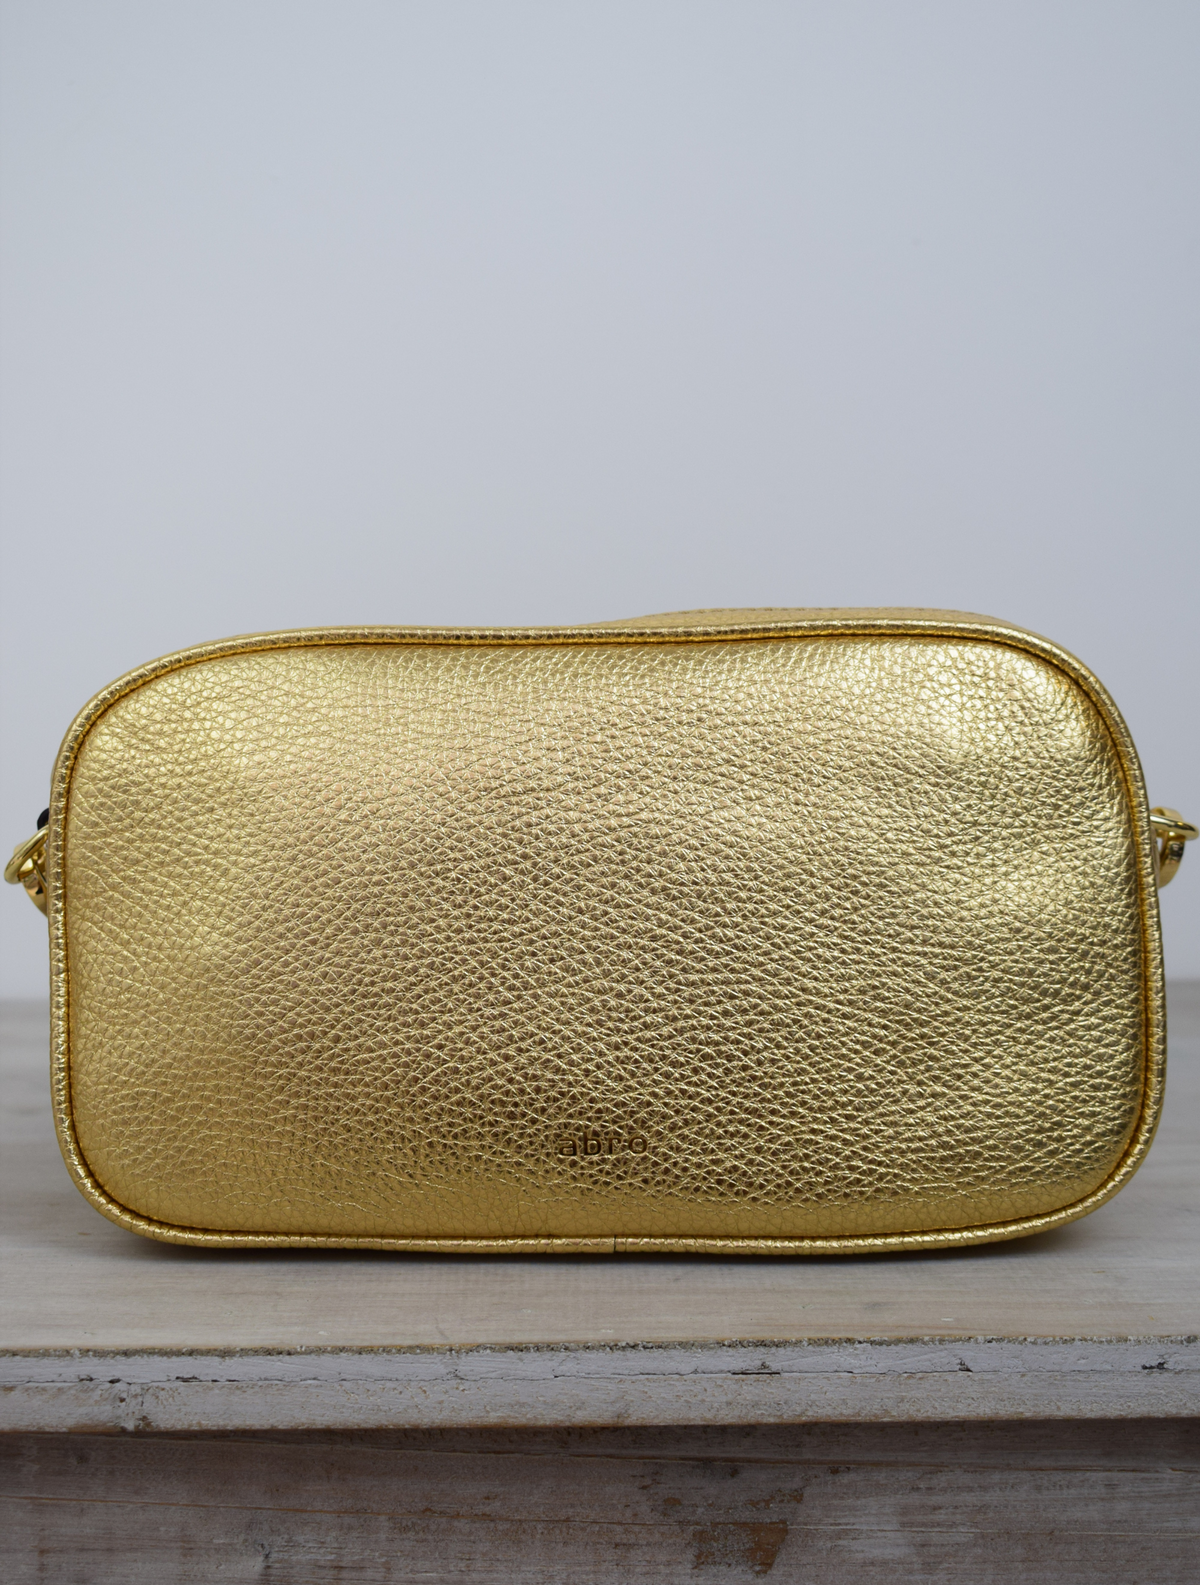 Gold coloured Italian leather small handbag with cross body strap